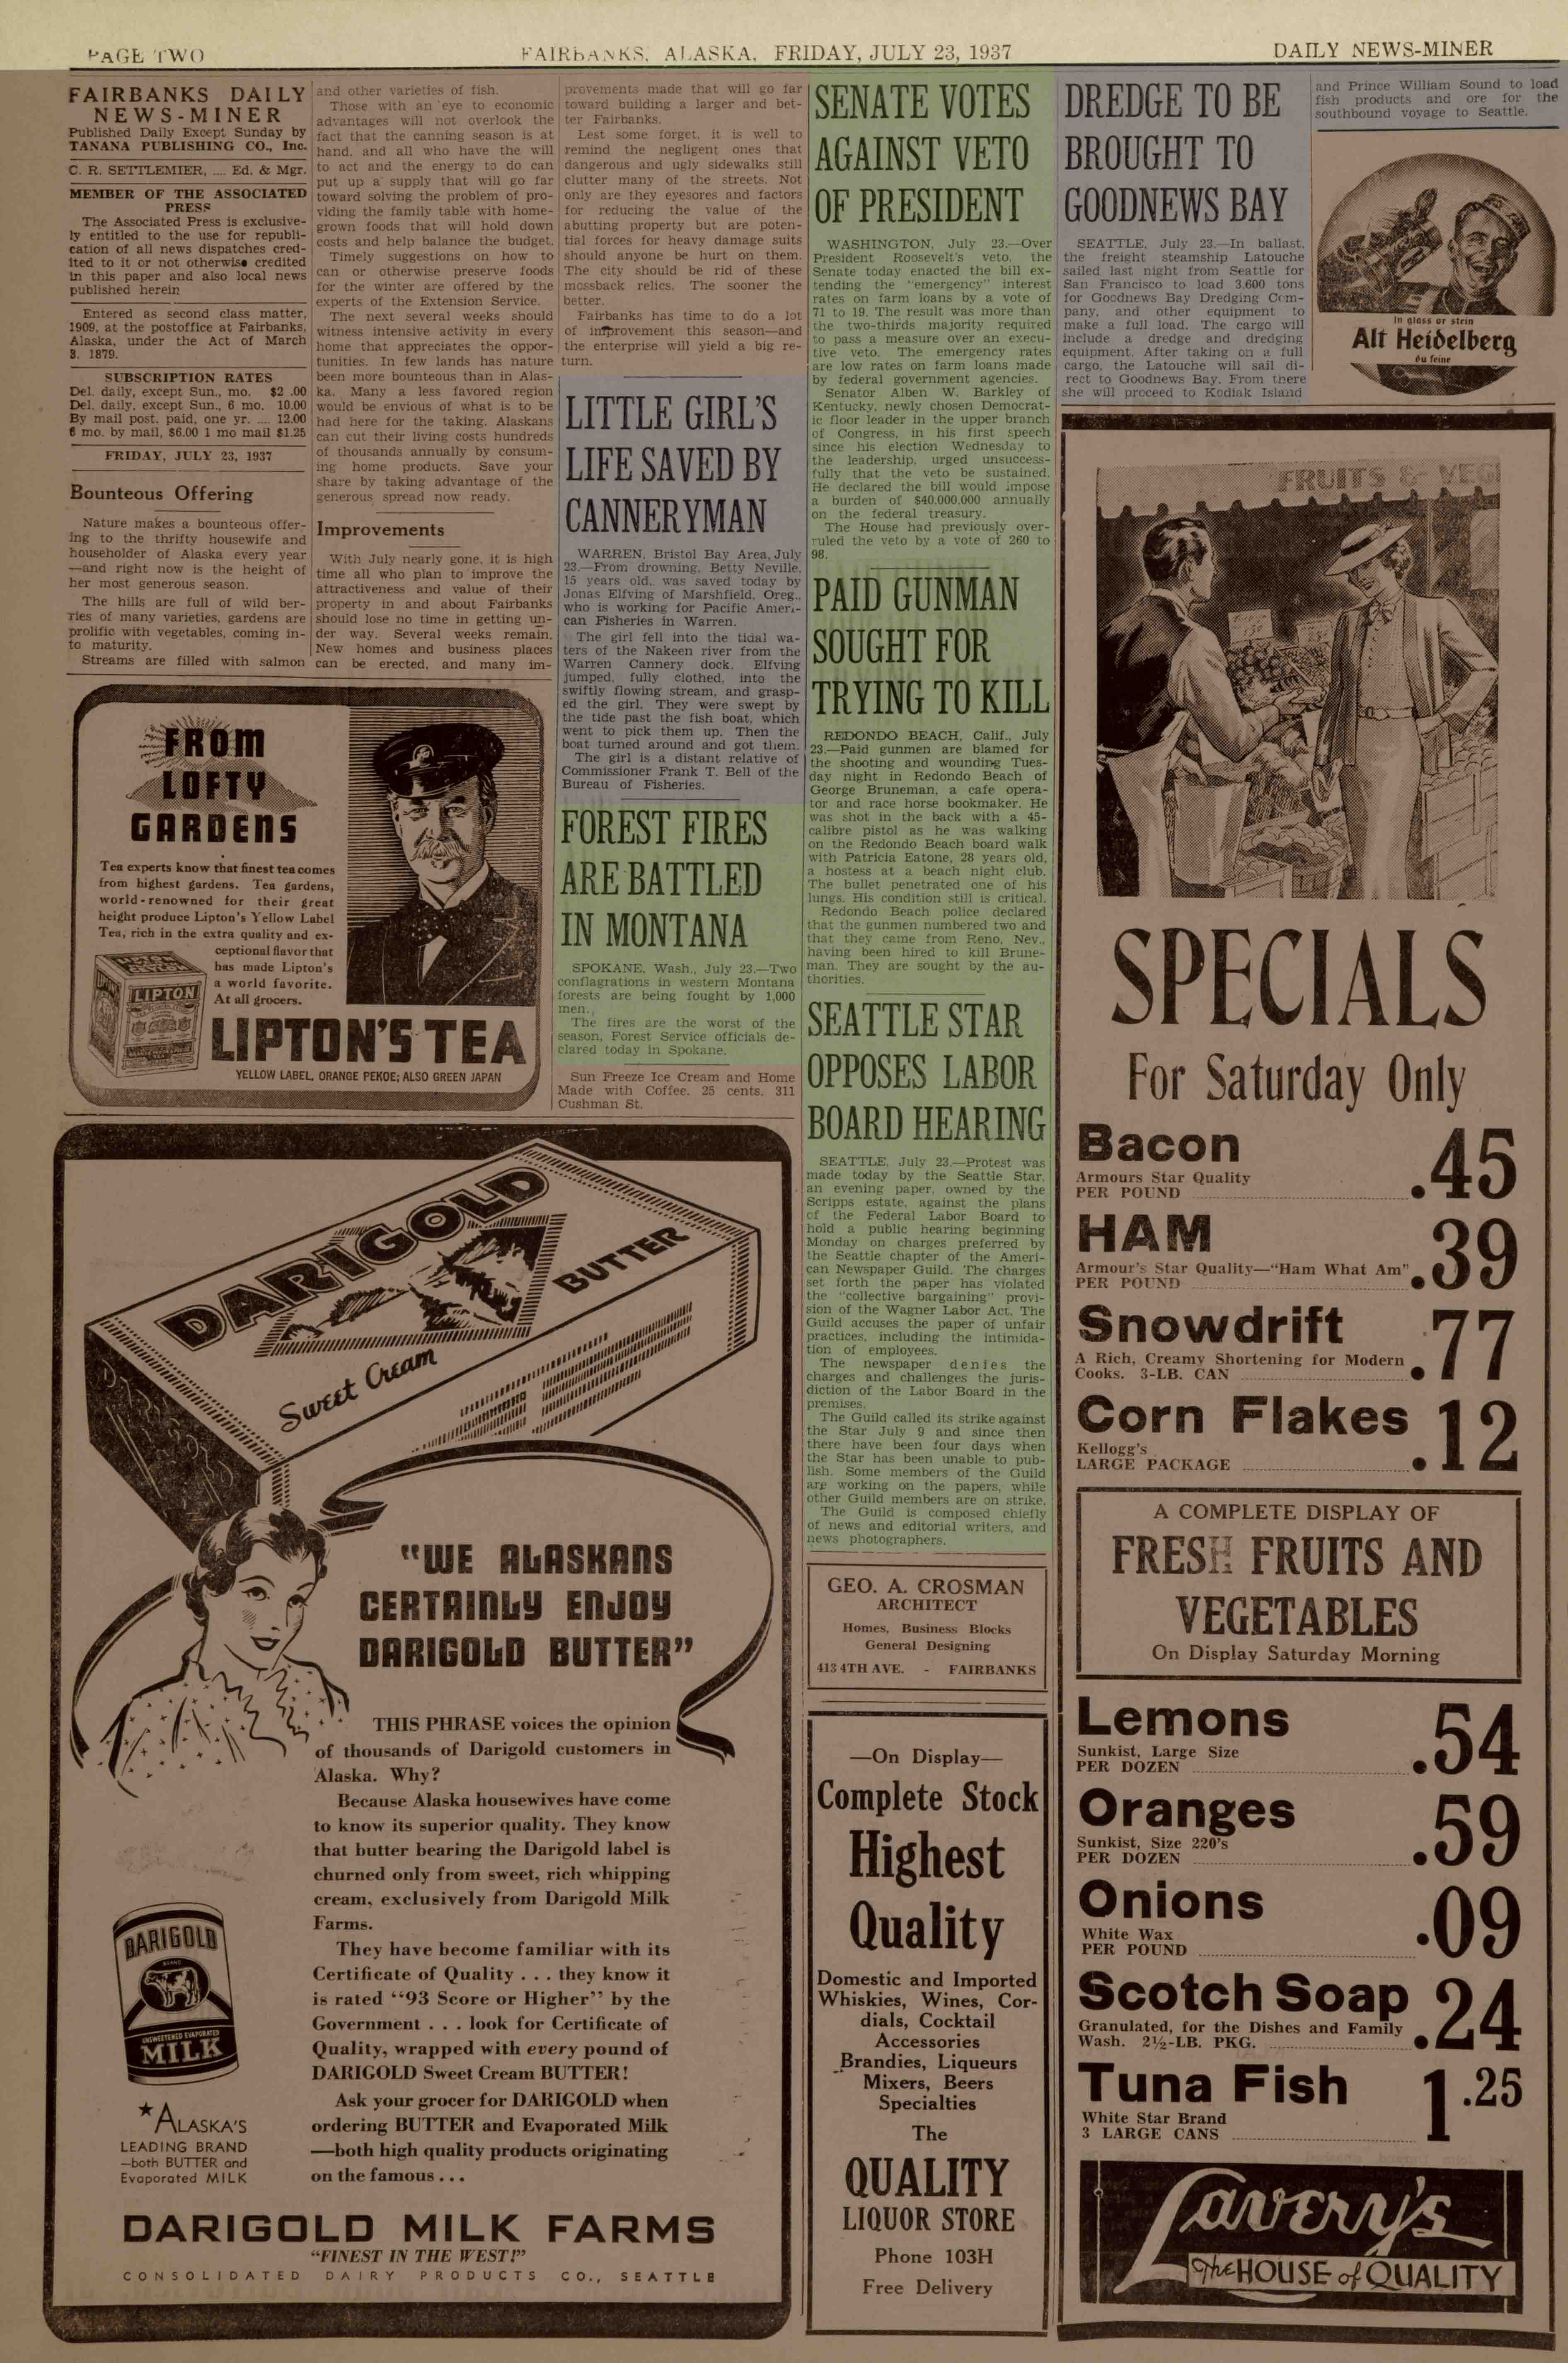 1937 July 23, Fairbanks Daily News-Miner (pg 2)